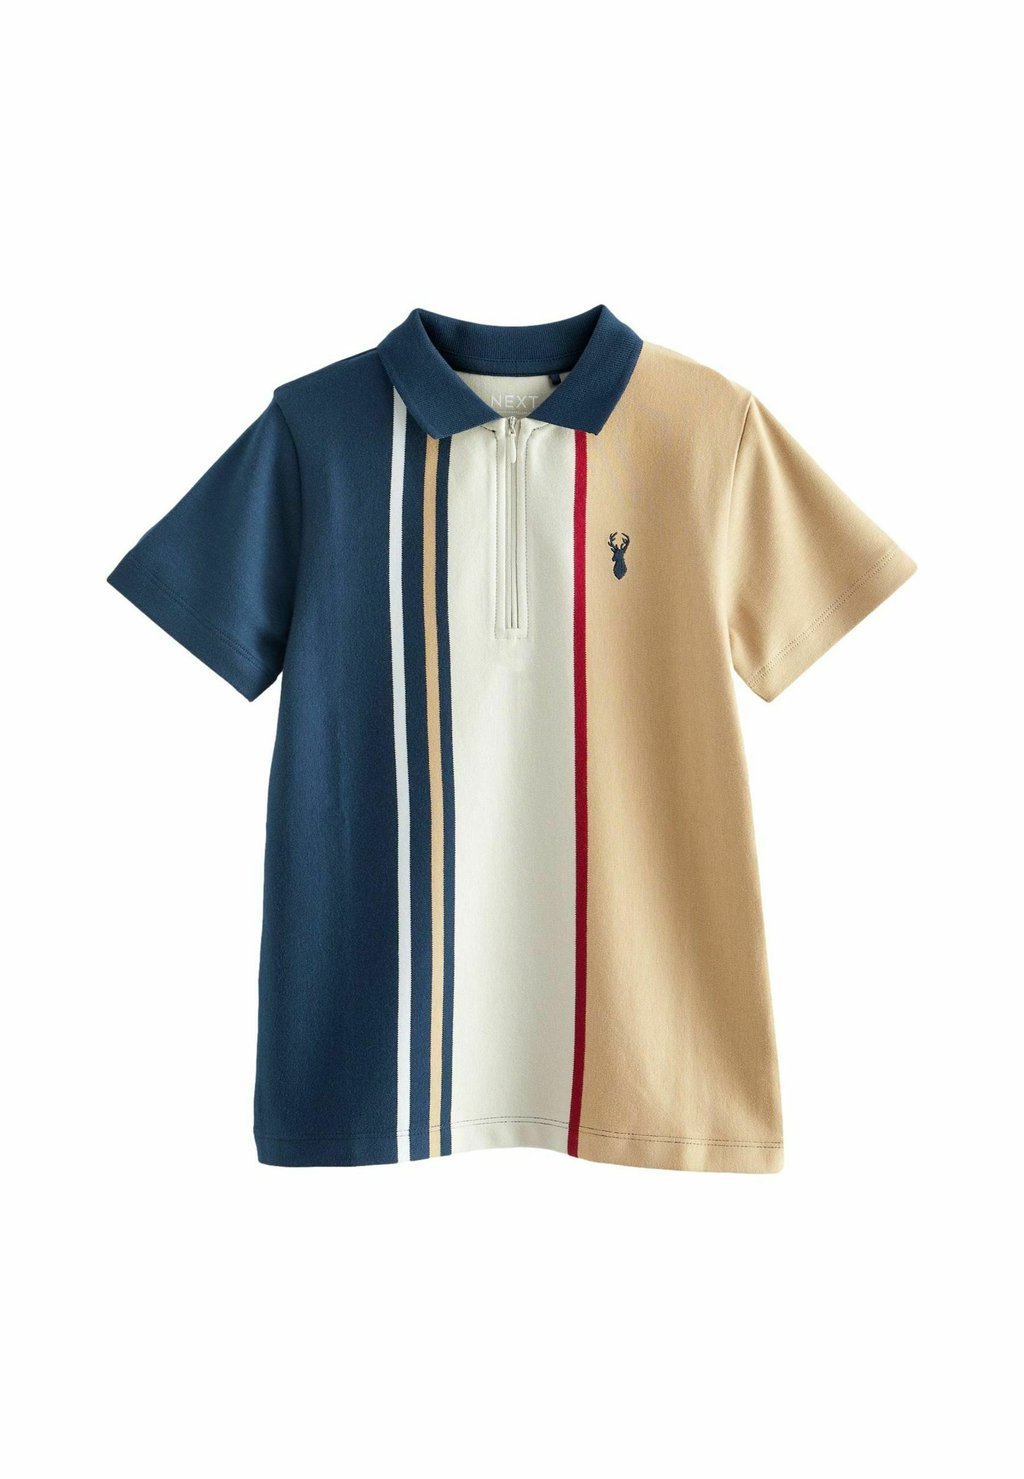 Рубашка-поло SHORT SLEEVE REGULAR FIT Next, цвет navyblue stone рубашка поло short sleeve regular fit next цвет neutral